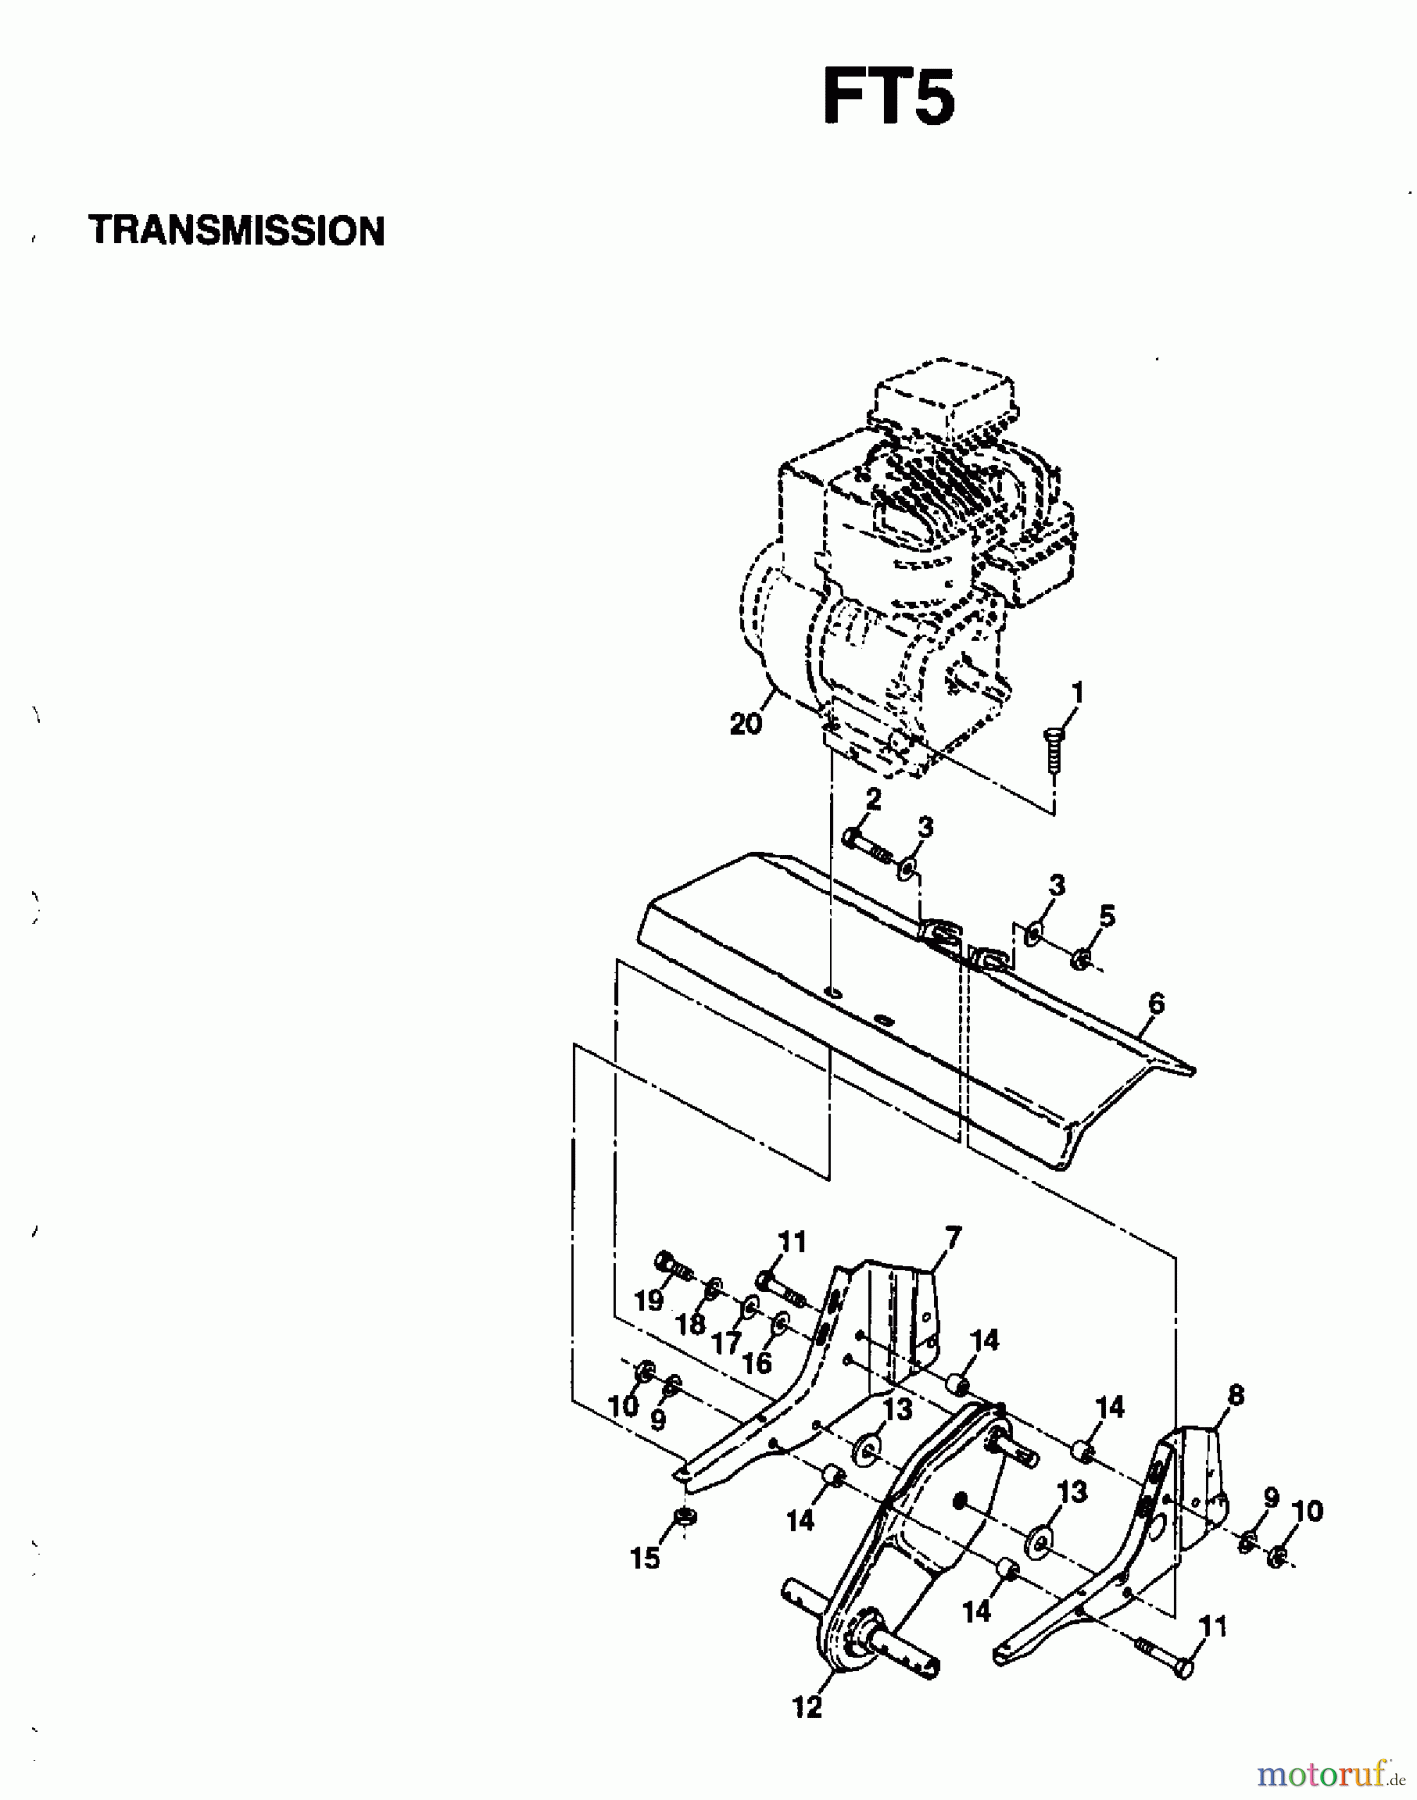  Jonsered Motorhacken / Kultivierer RT5 (954003451) - Jonsered Rear-Tine Tiller (1997-01) TRANSMISSION #2